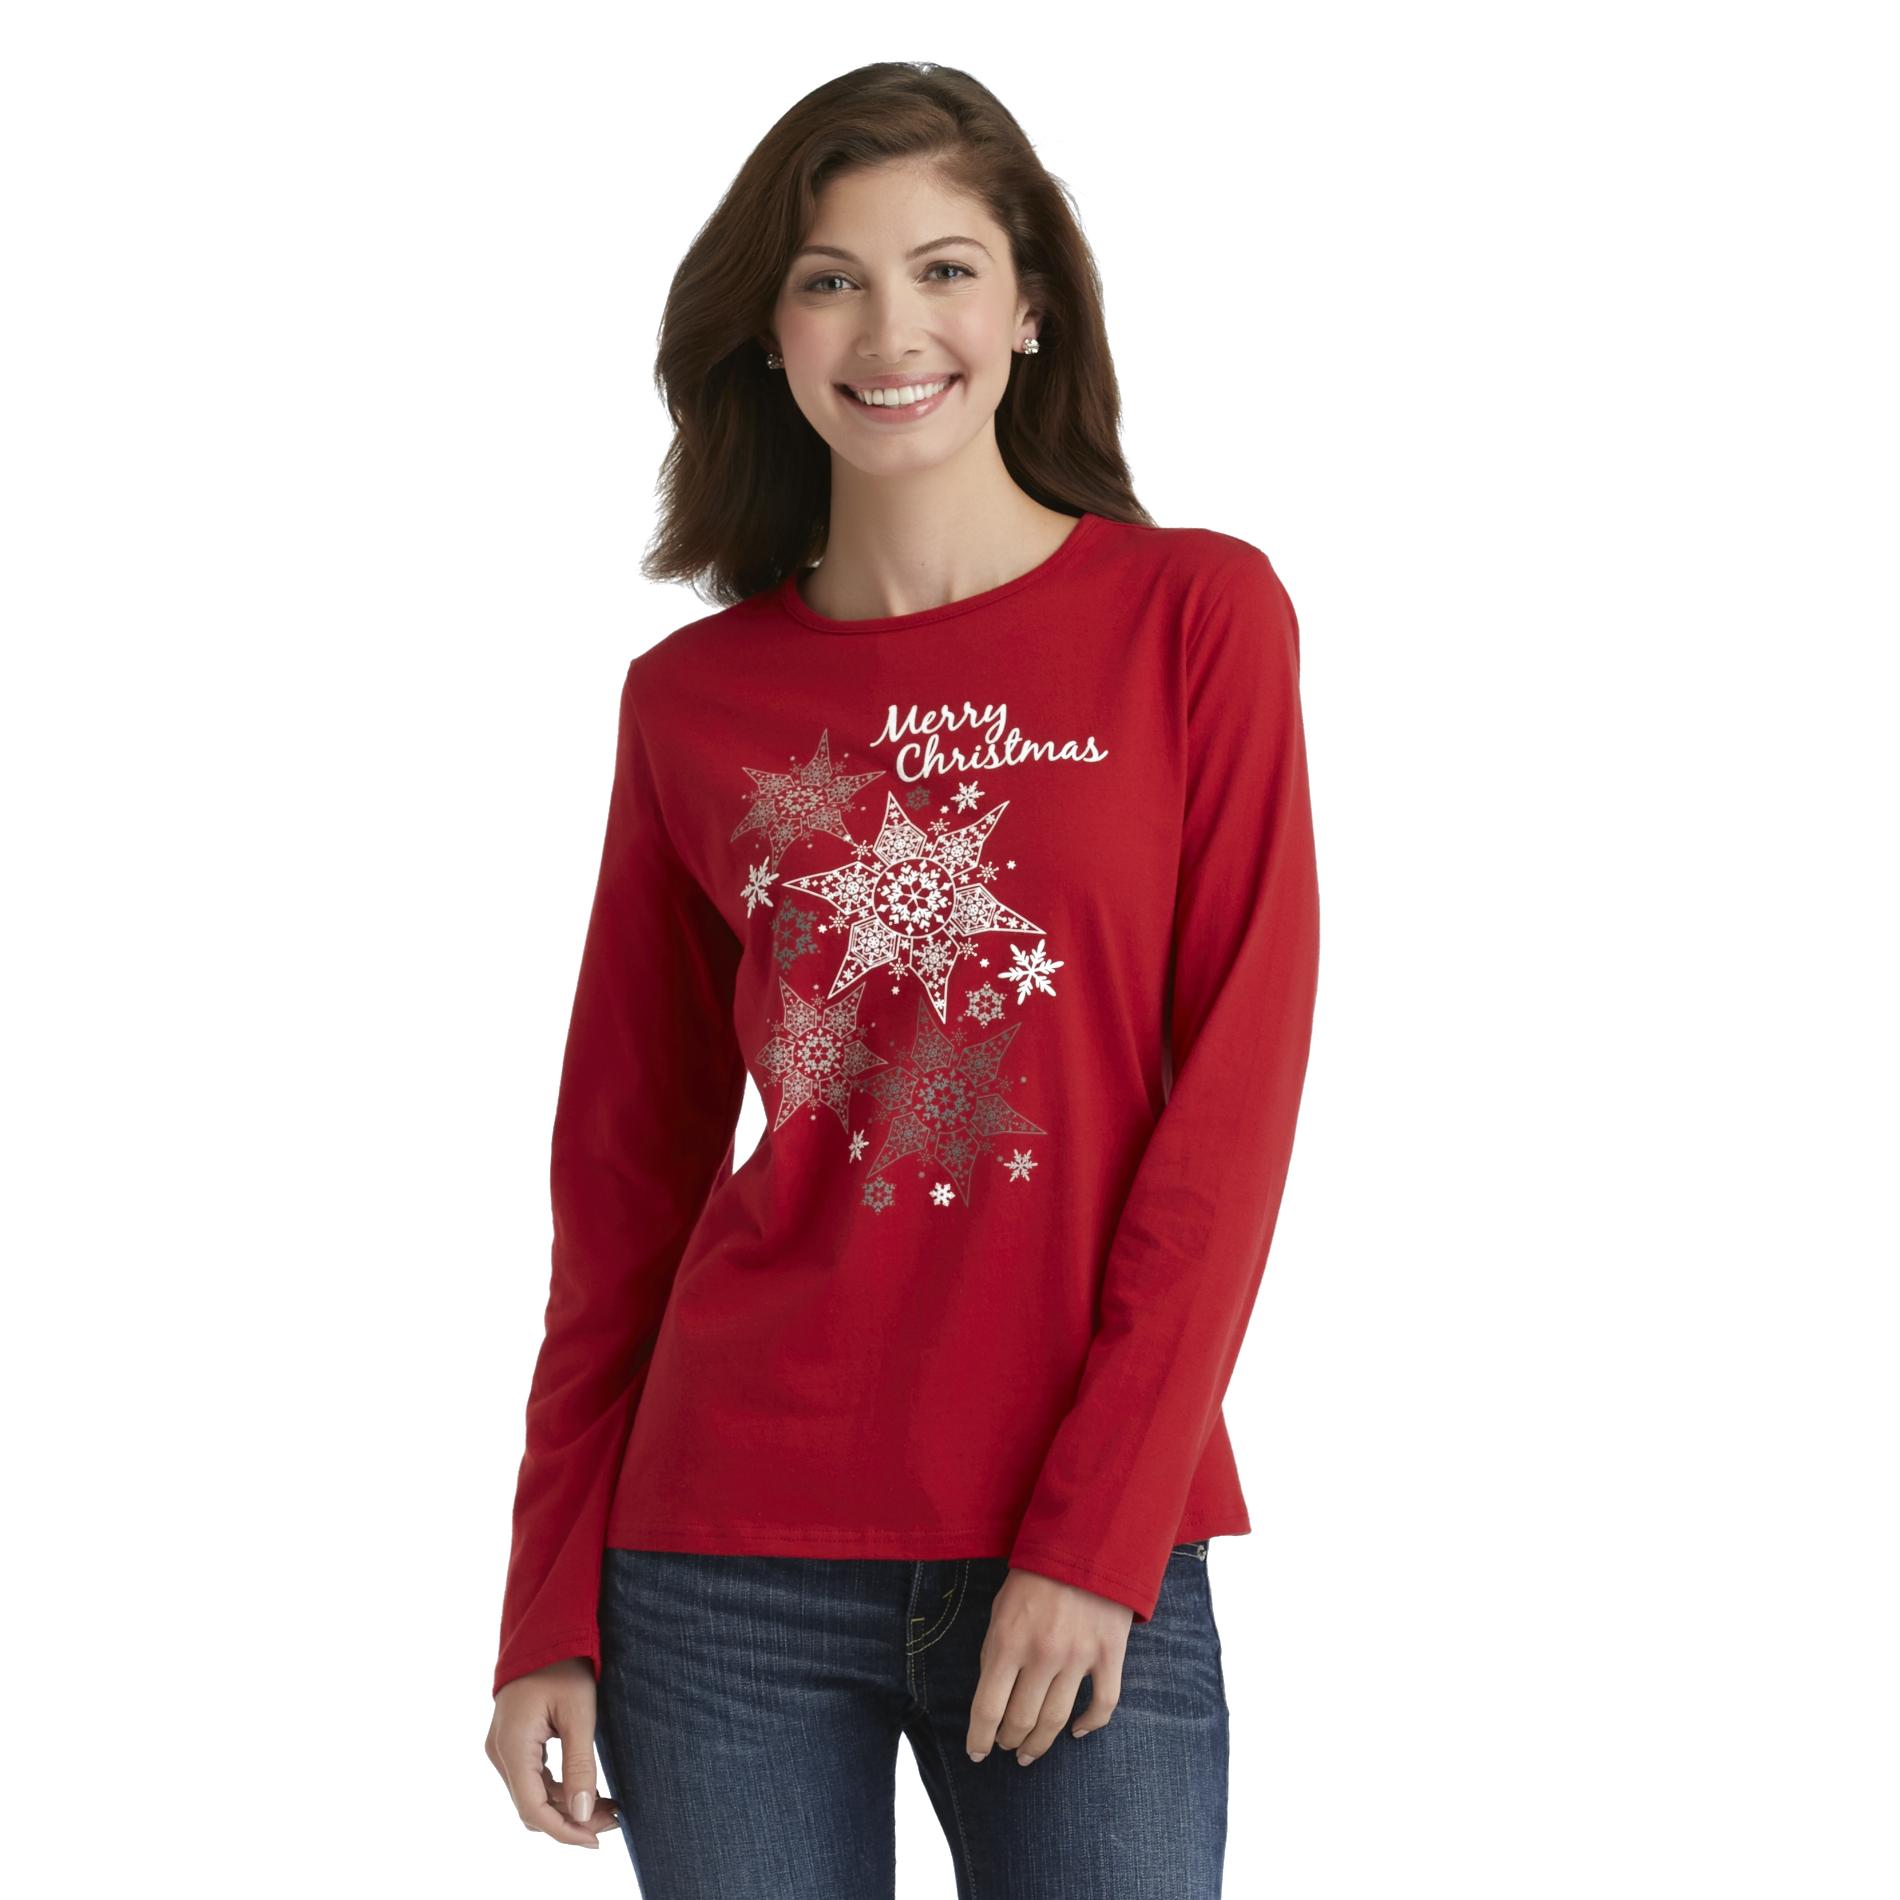 Holiday Editions Women's Christmas T-Shirt - Merry Christmas